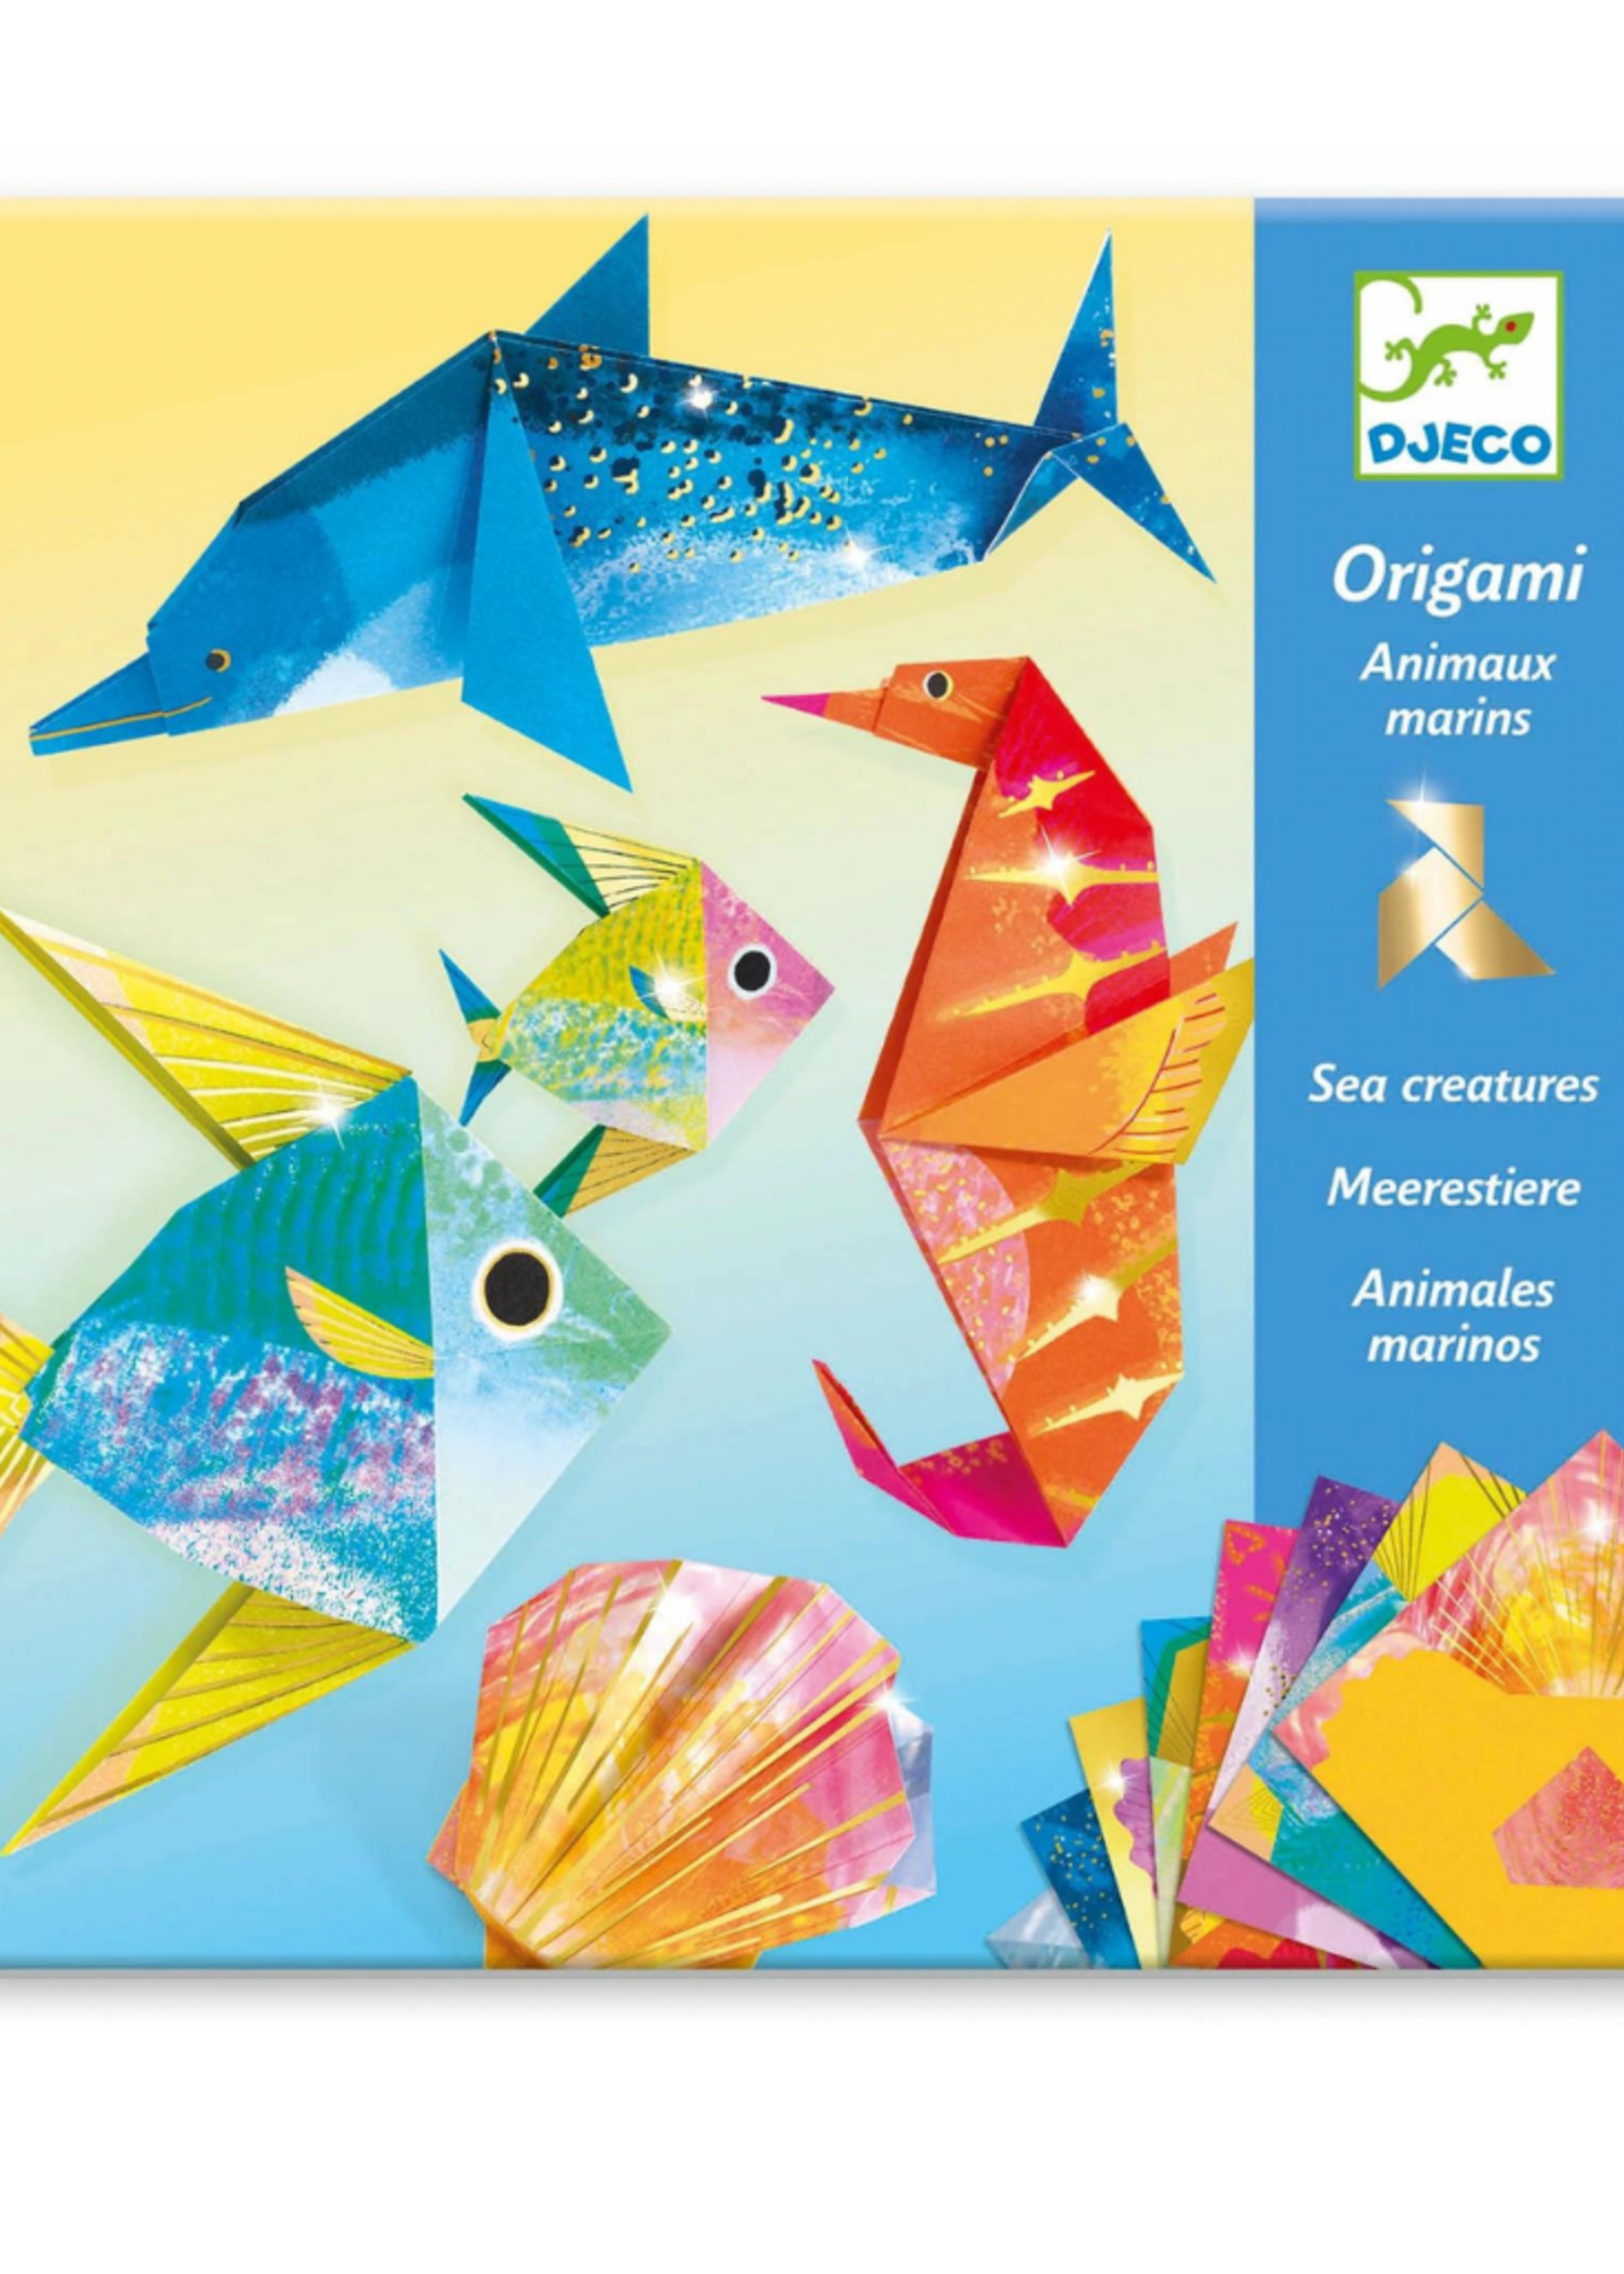 Djeco Origami: Sea Creatures